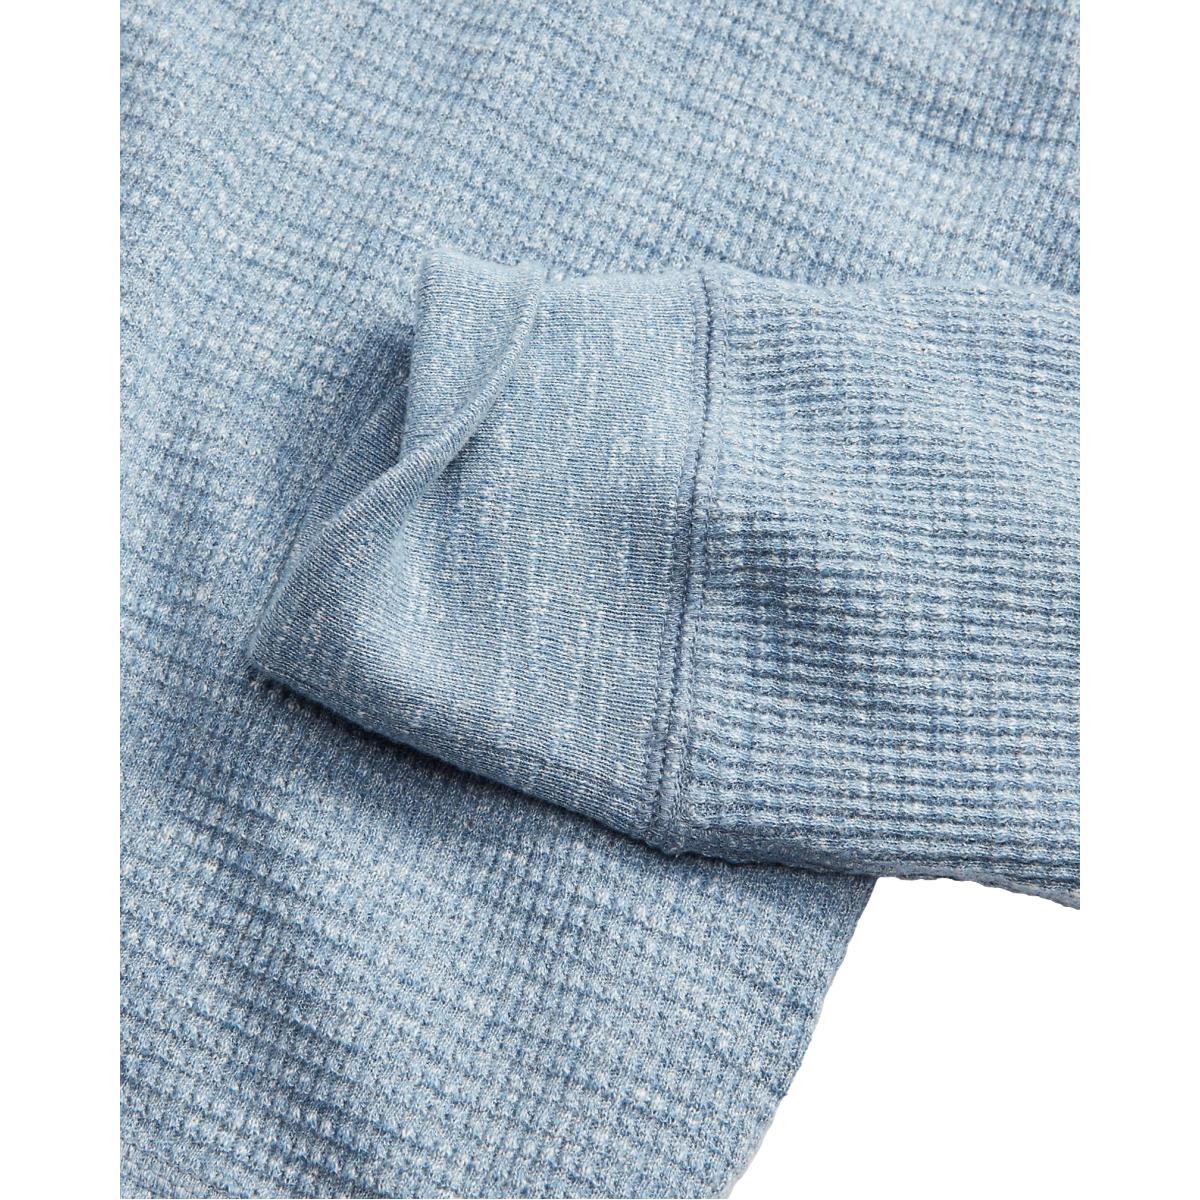 Garment-Dyed Waffle-Knit Henley Shirt Blue Heather - Henley